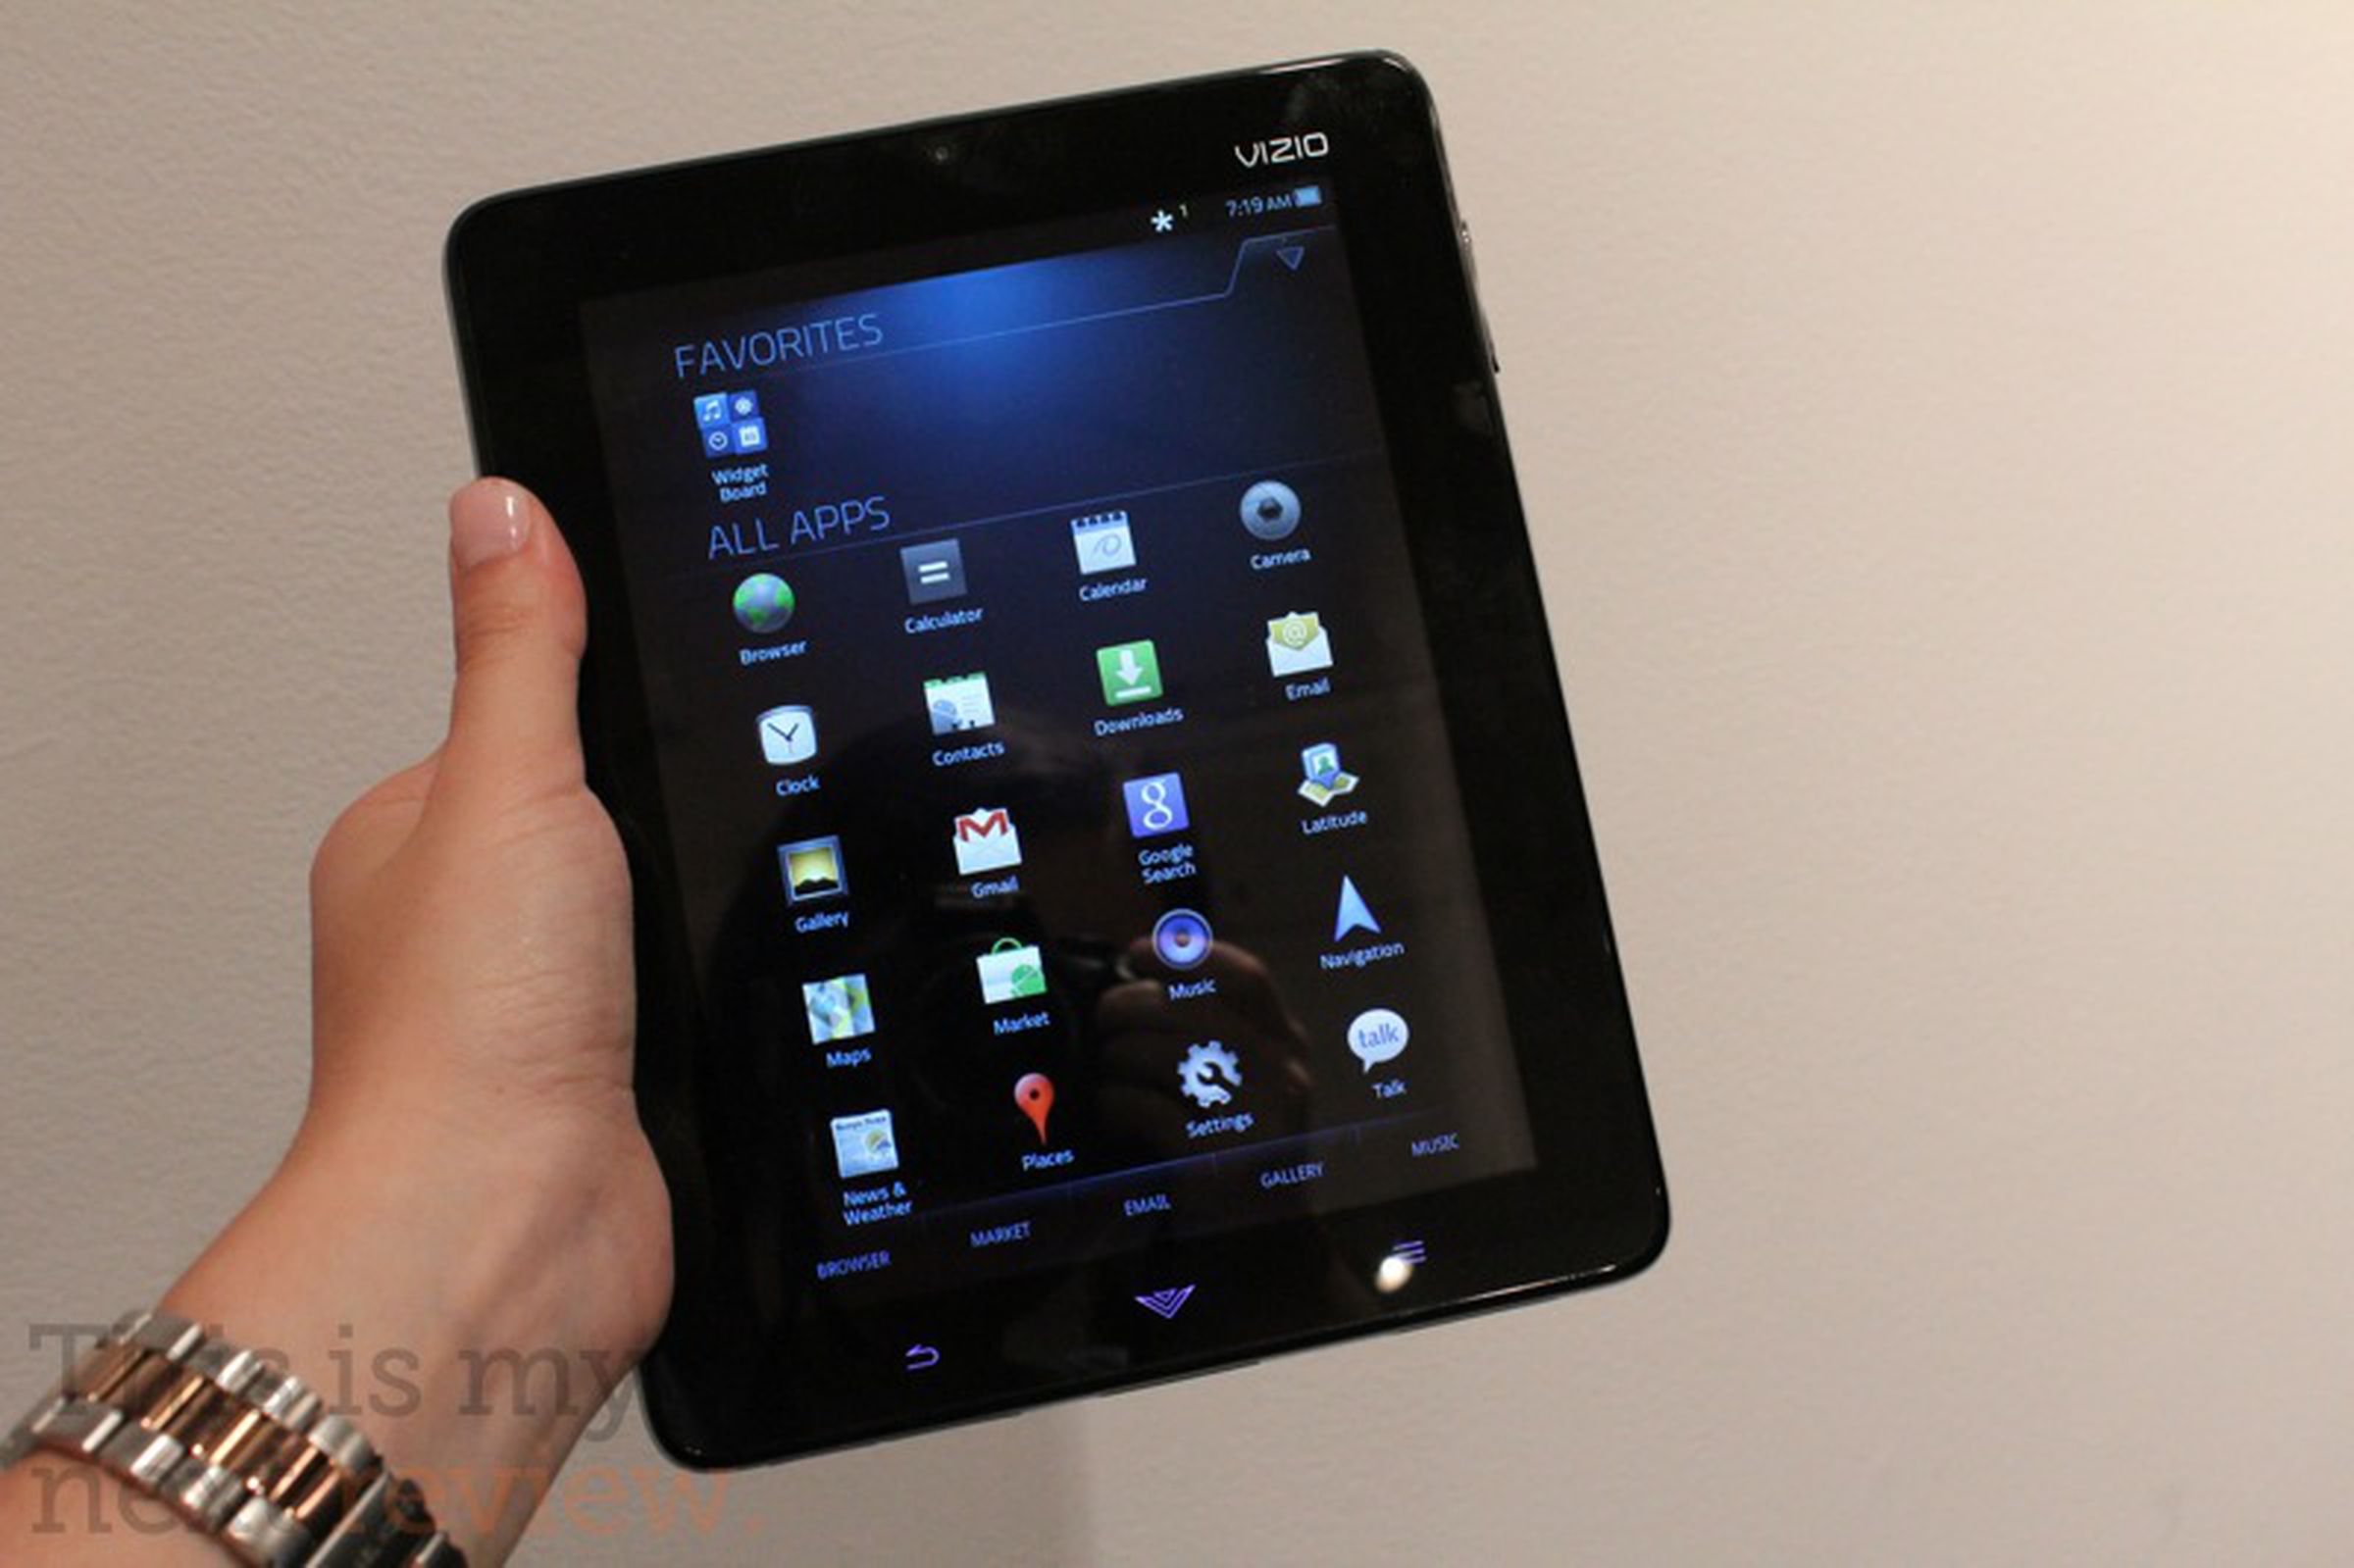 Vizio Tablet hands-on